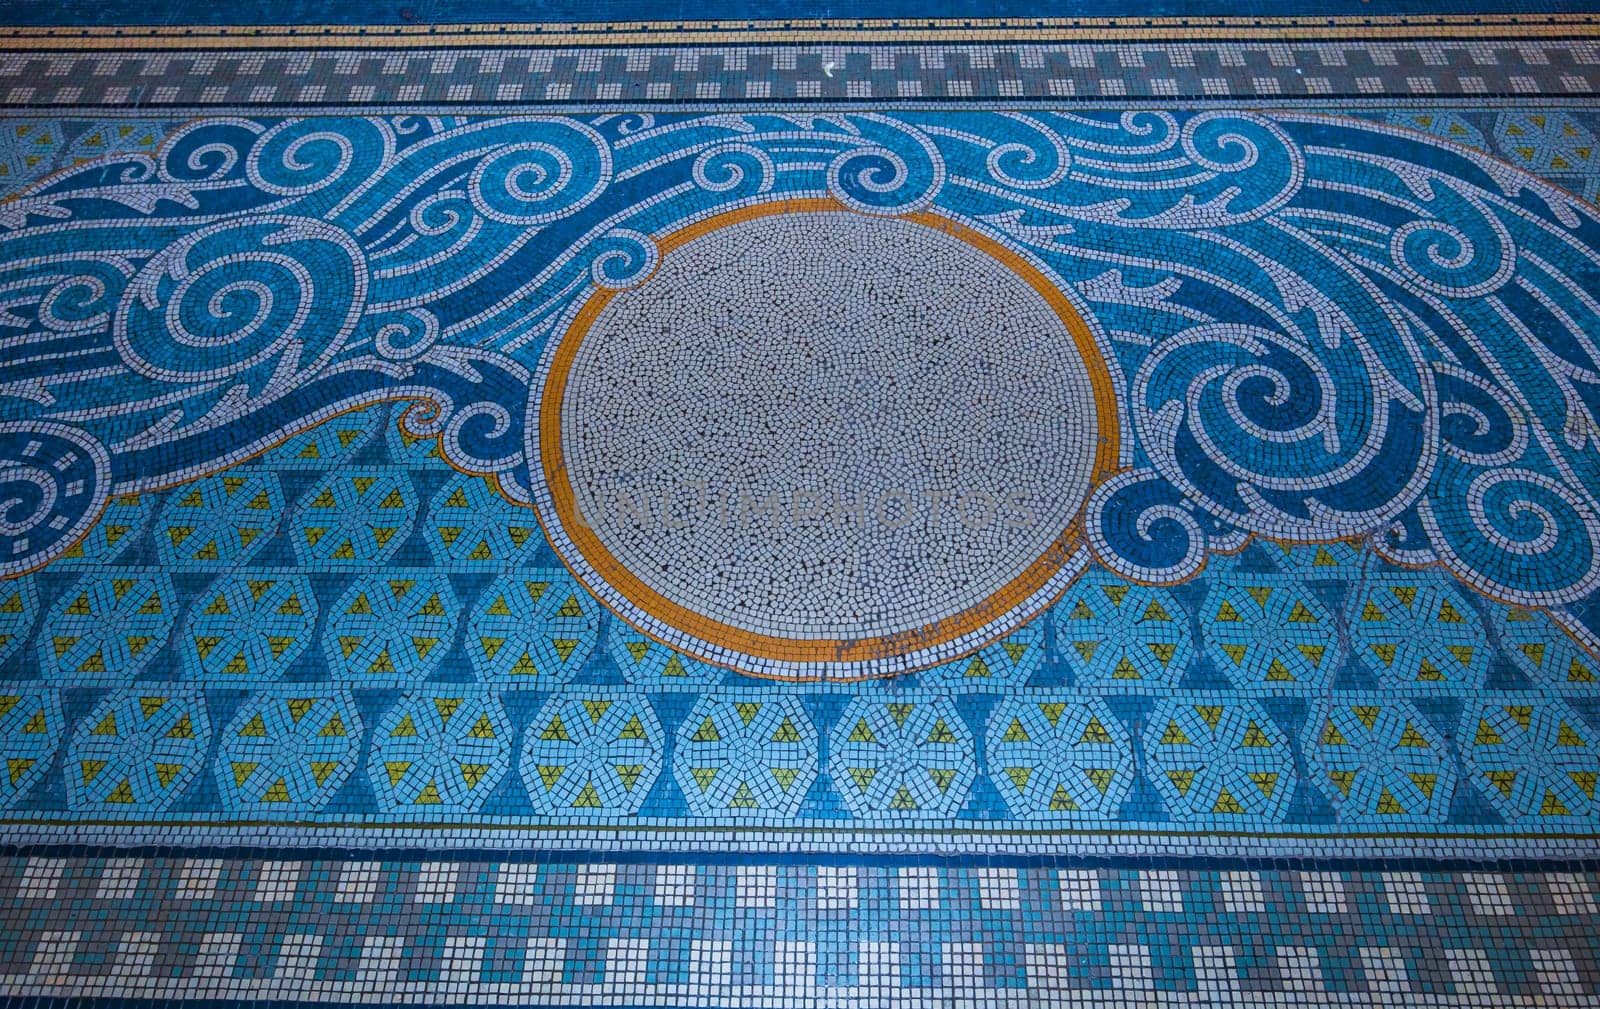 Saint Etienne church in Briare, Loiret, France, pavement mosaic by photogolfer